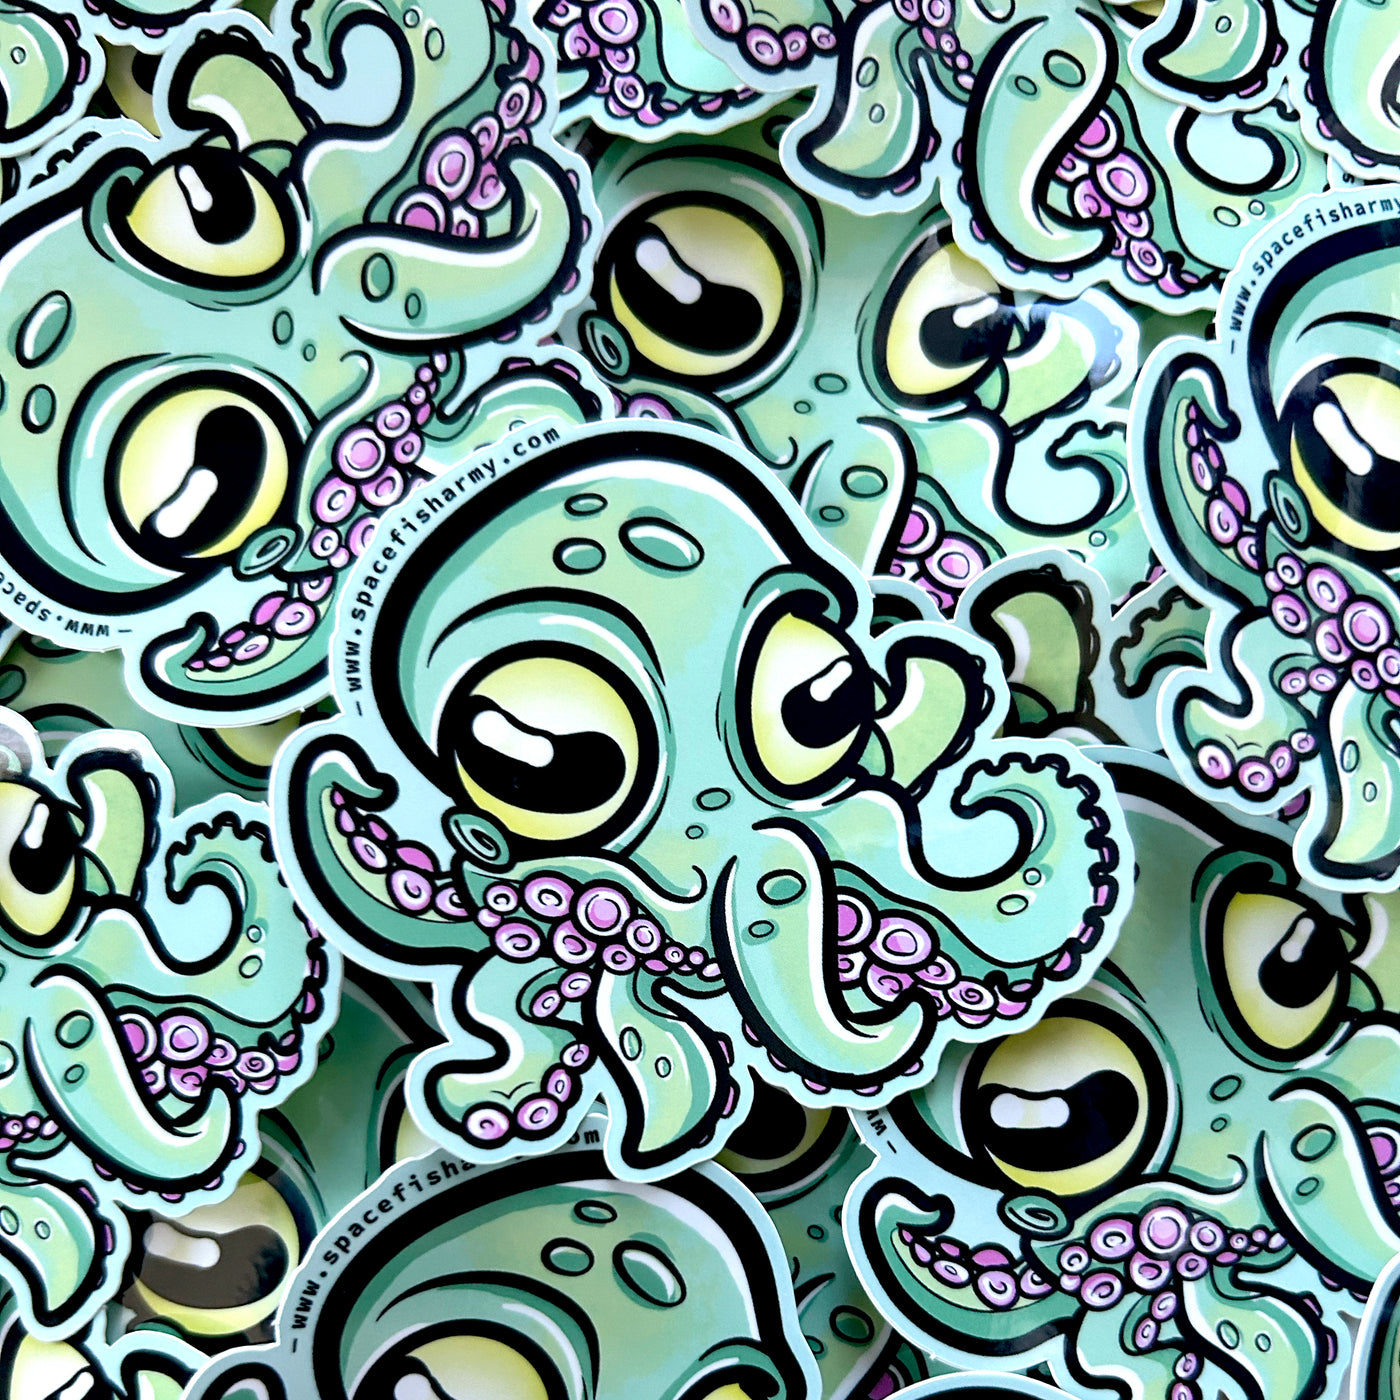 Cookie the Octopus Sticker